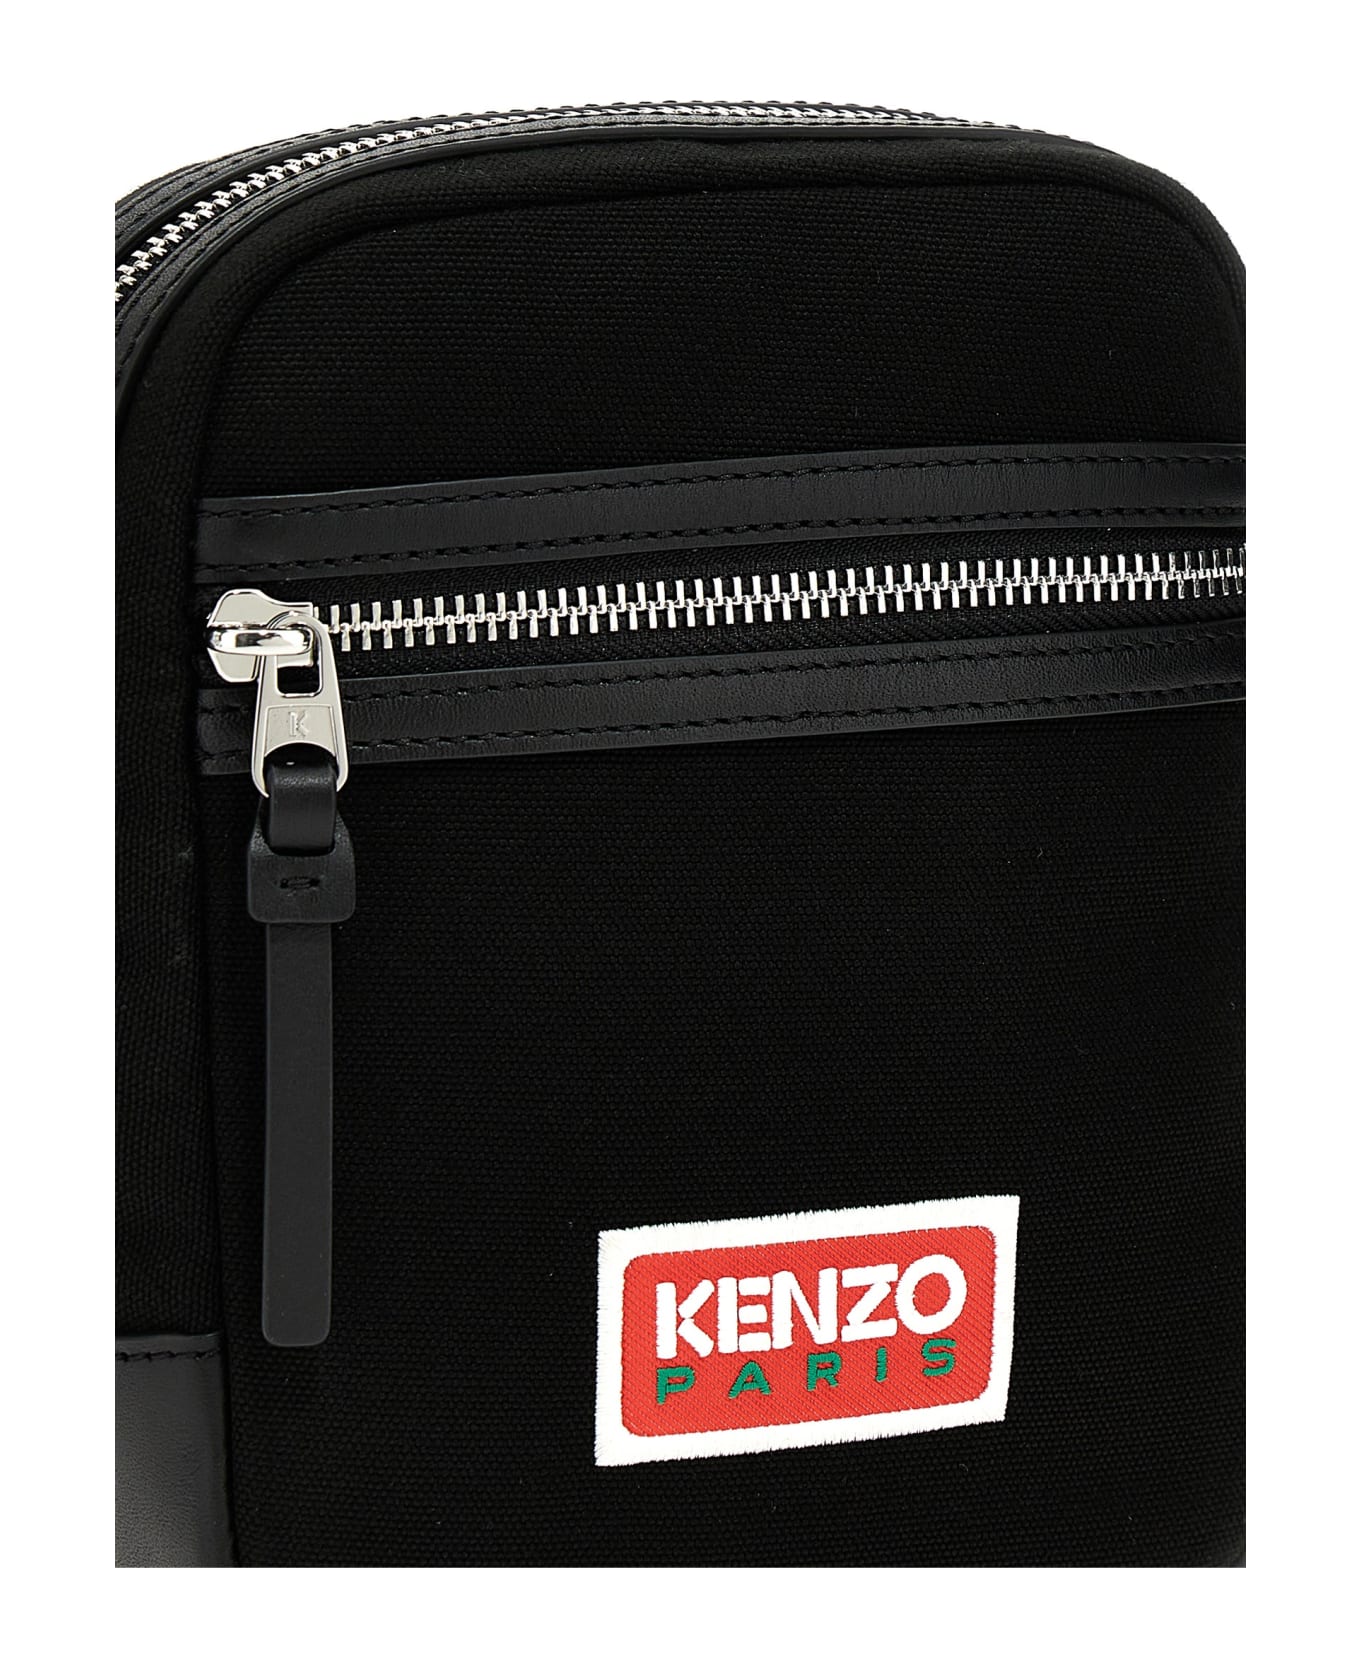 Kenzo Explore Shoulder Bag - Black